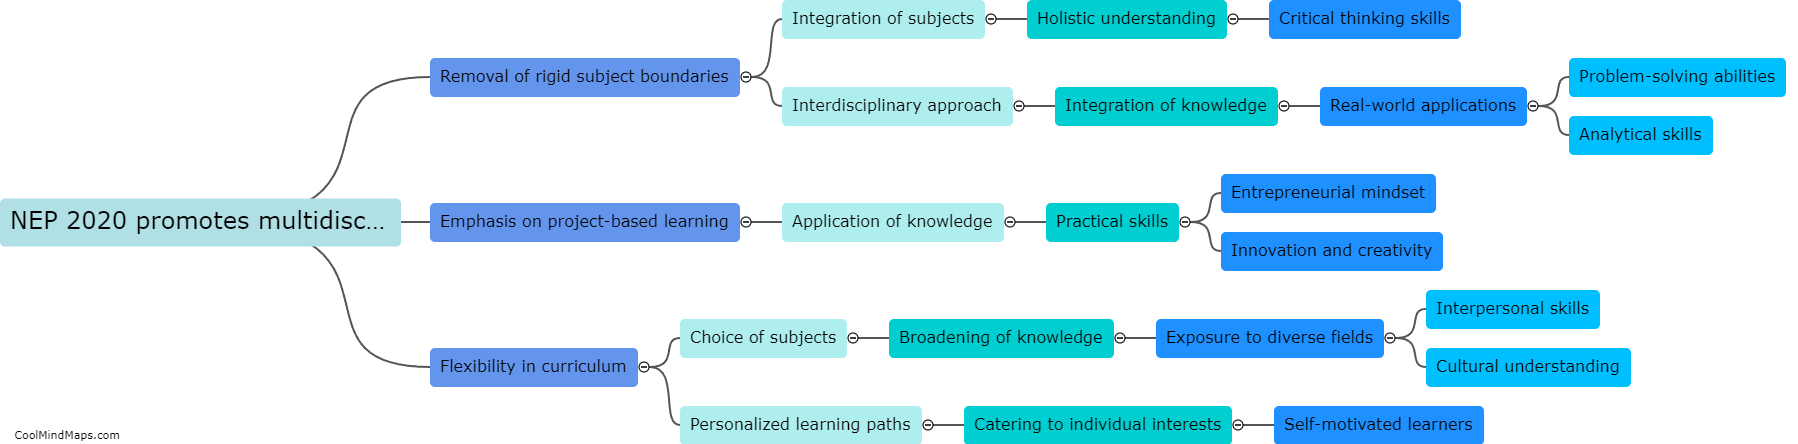 How does NEP 2020 promote multidisciplinary learning?